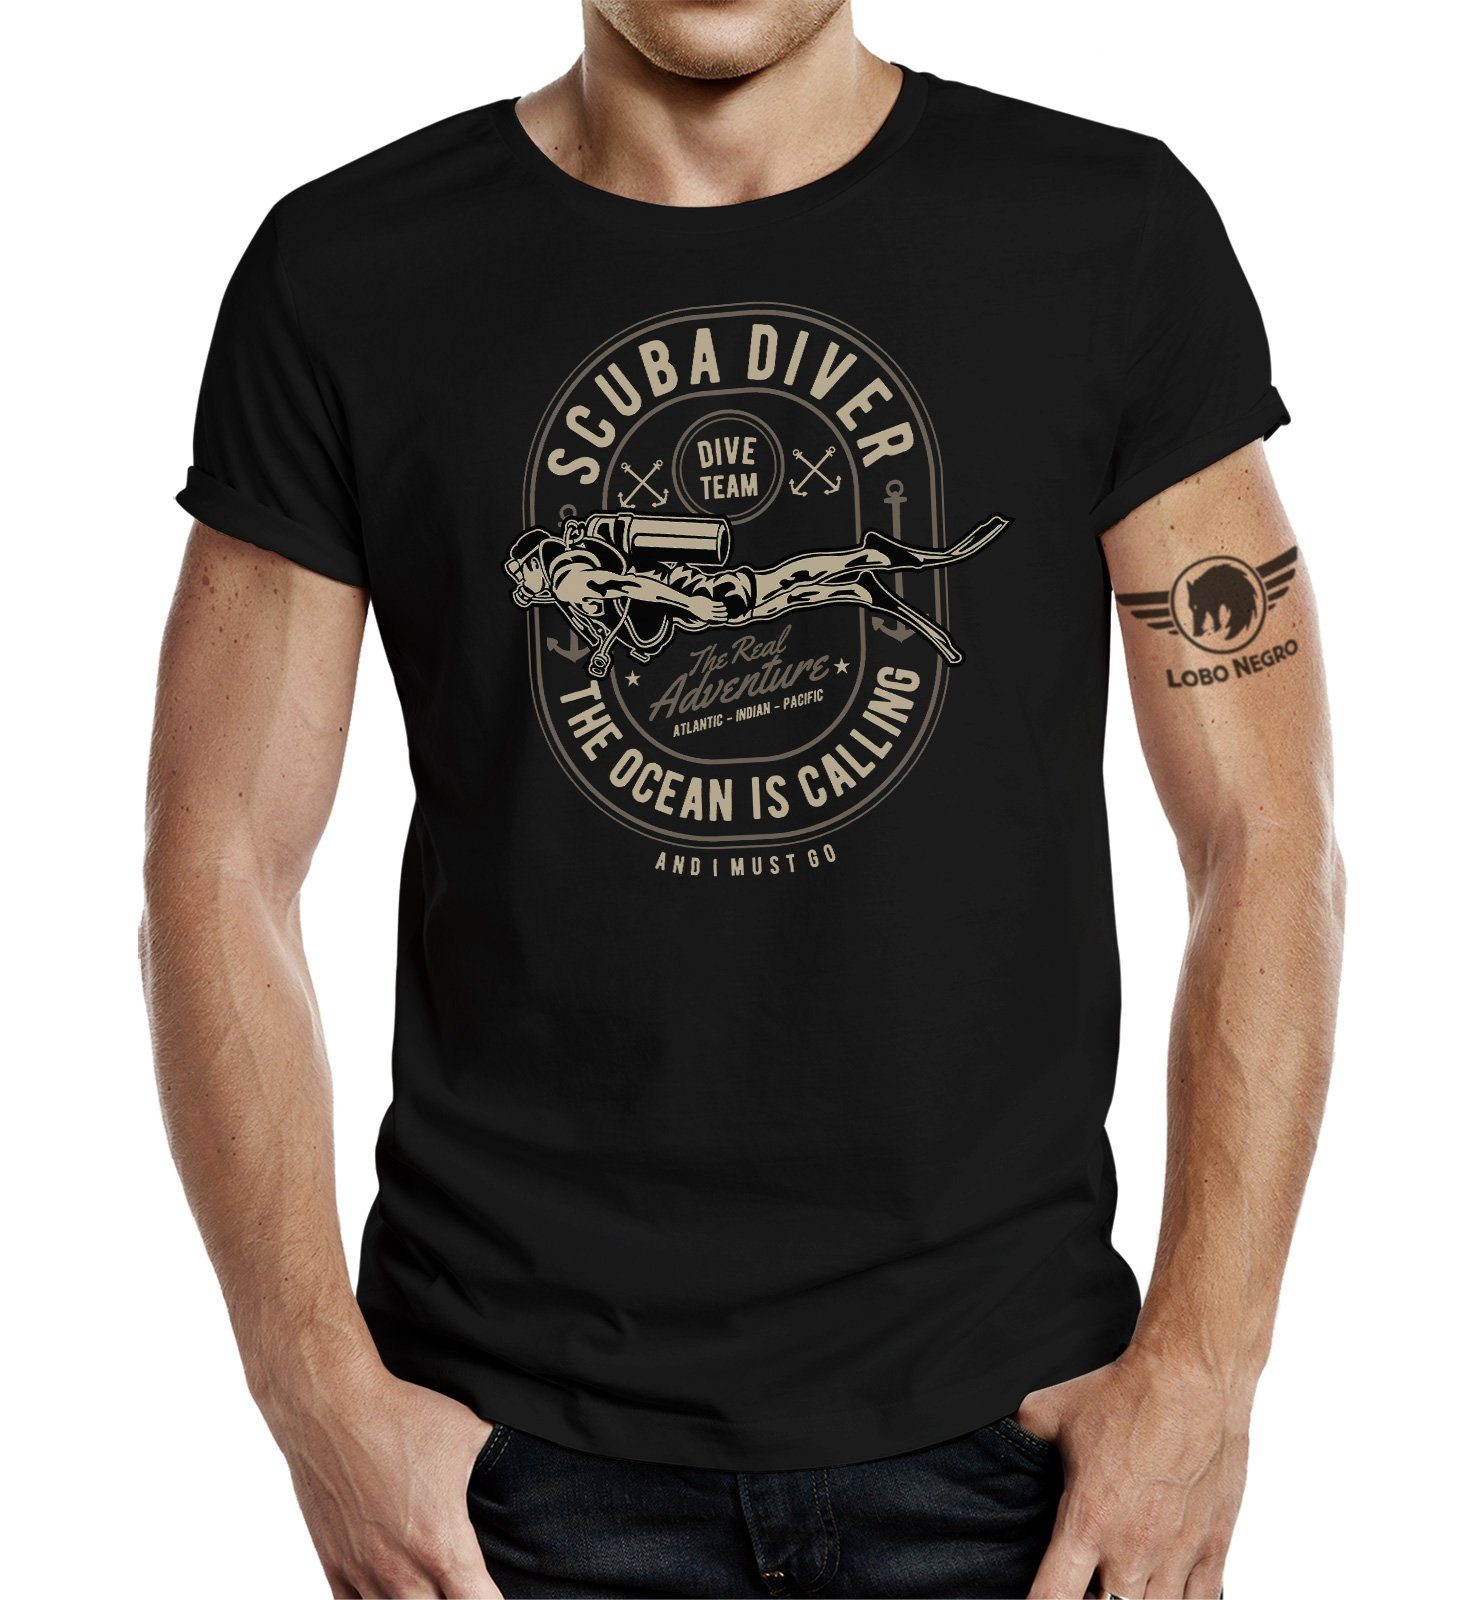 LOBO NEGRO® T-Shirt für den aktiven Taucher: Scuba Diver, The Ocean is Calling